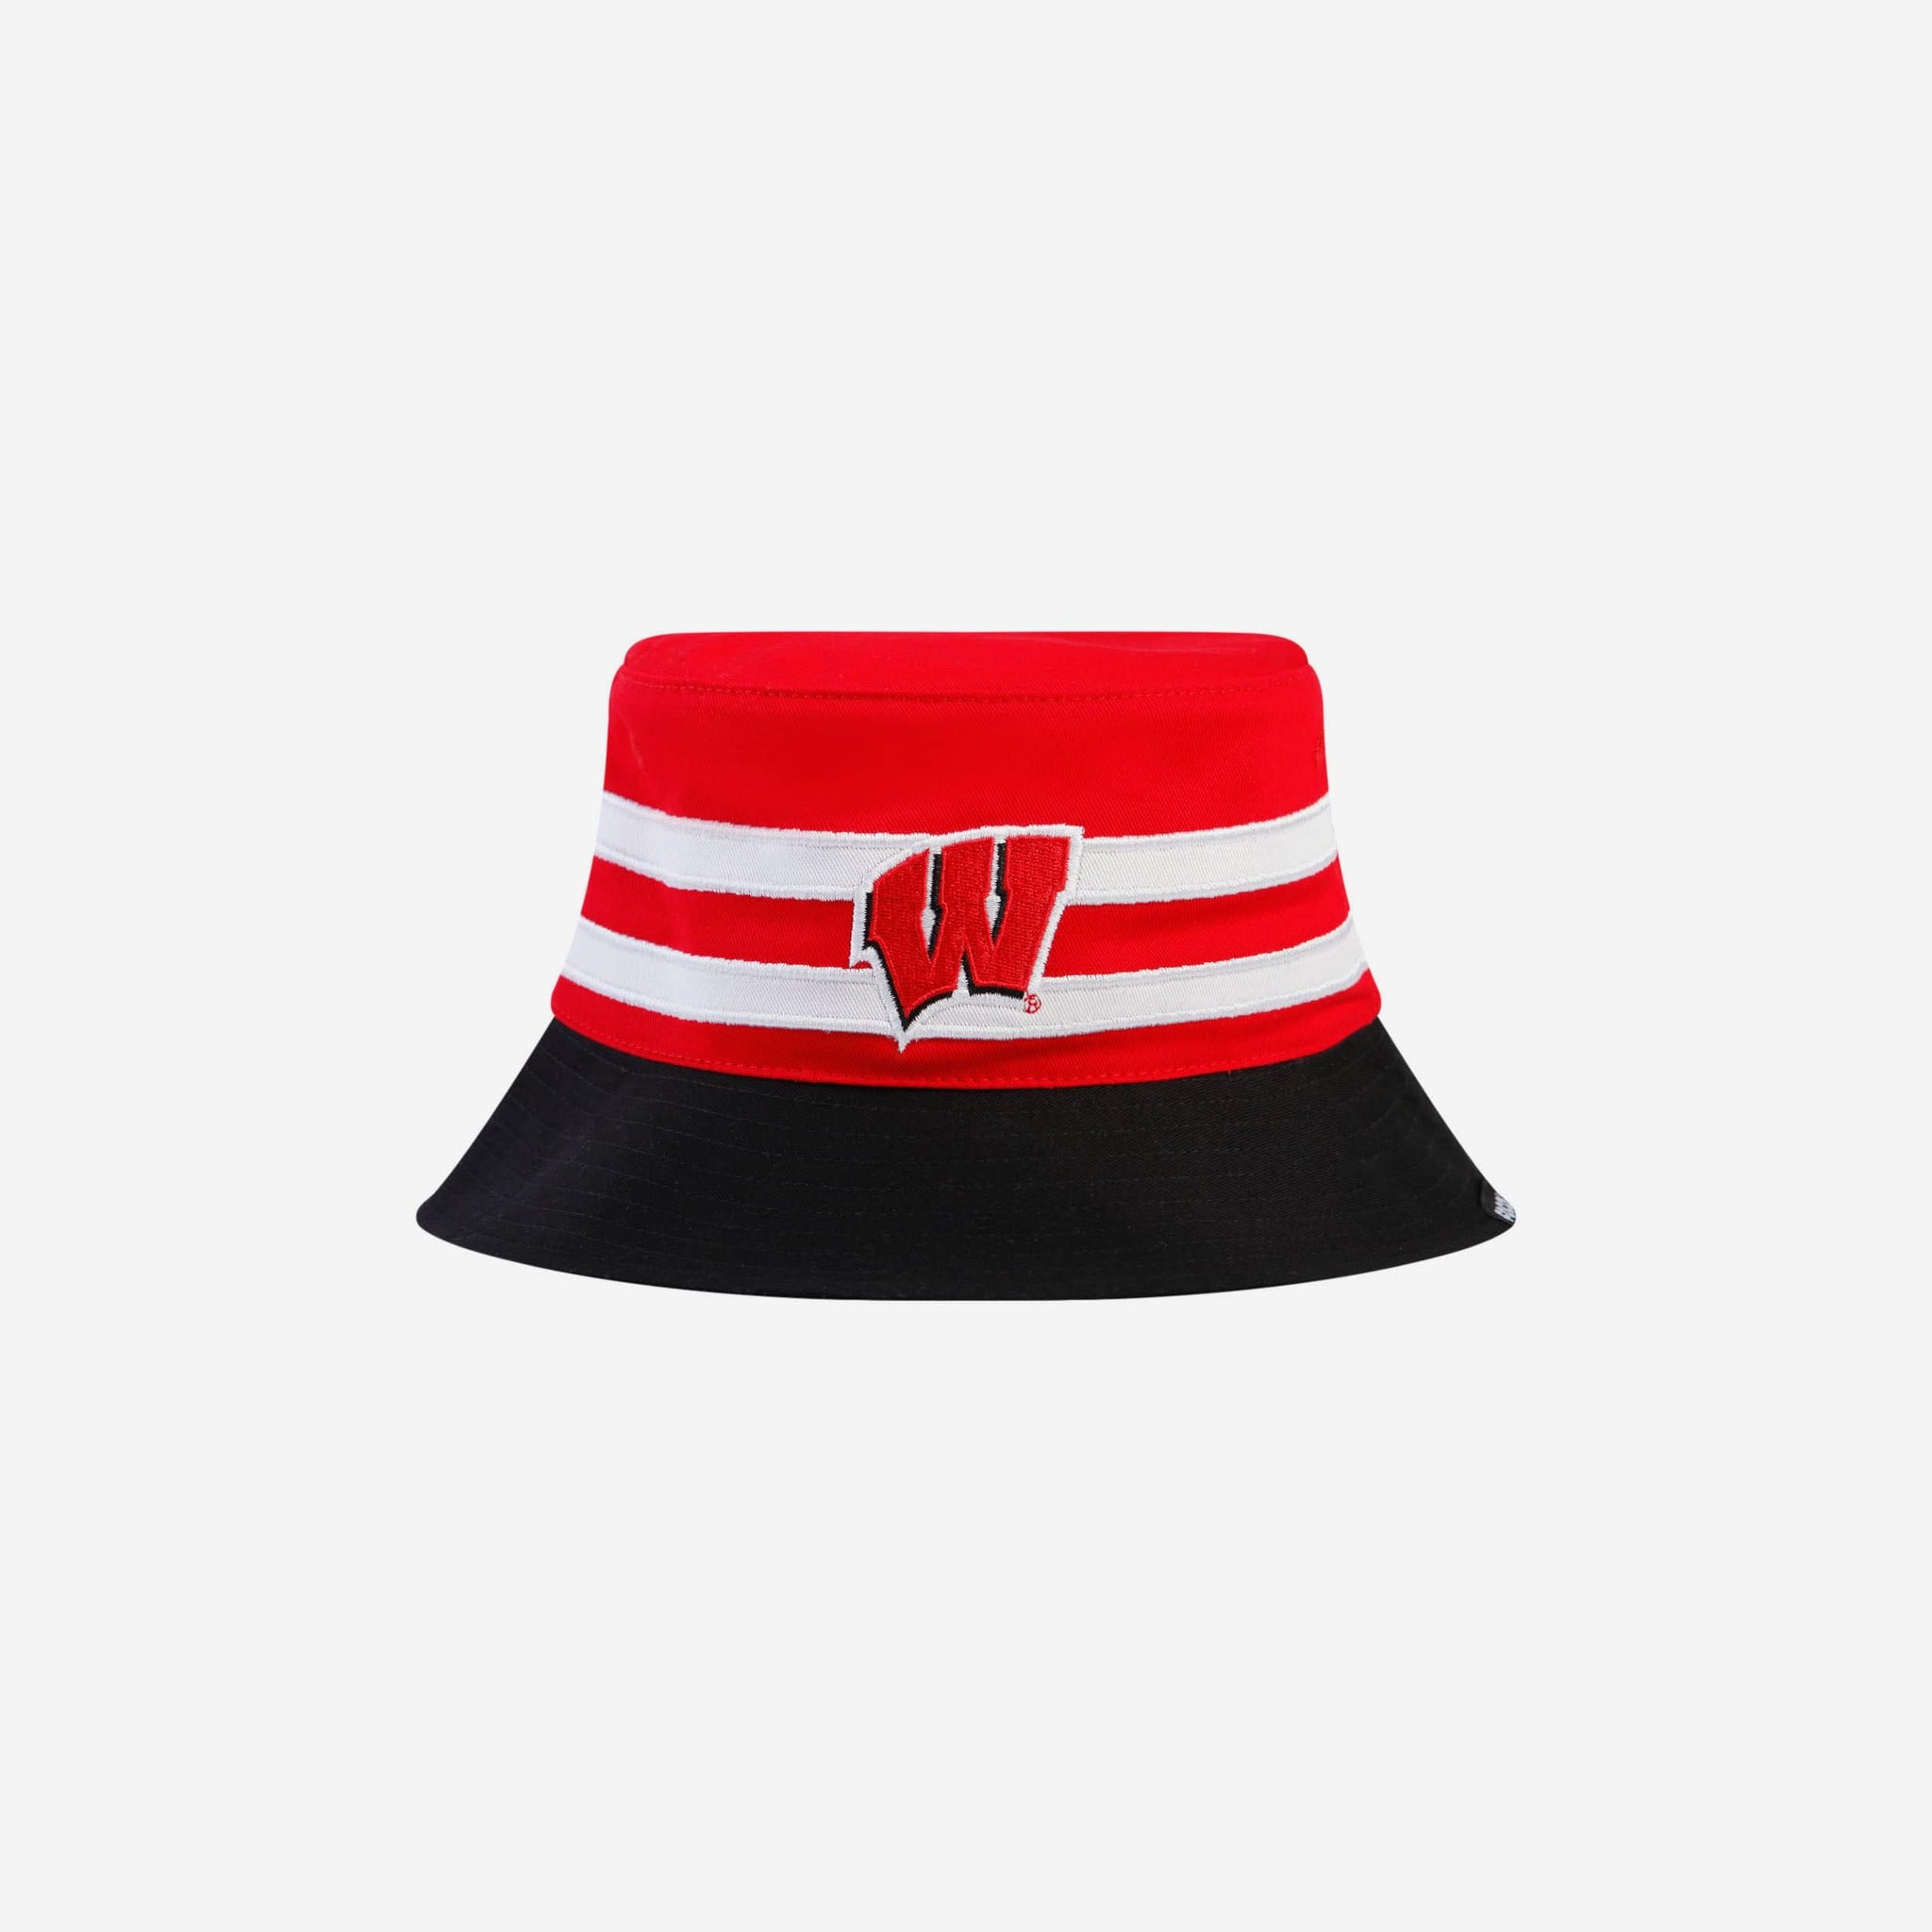 St. Louis City SC Bucket Hat 